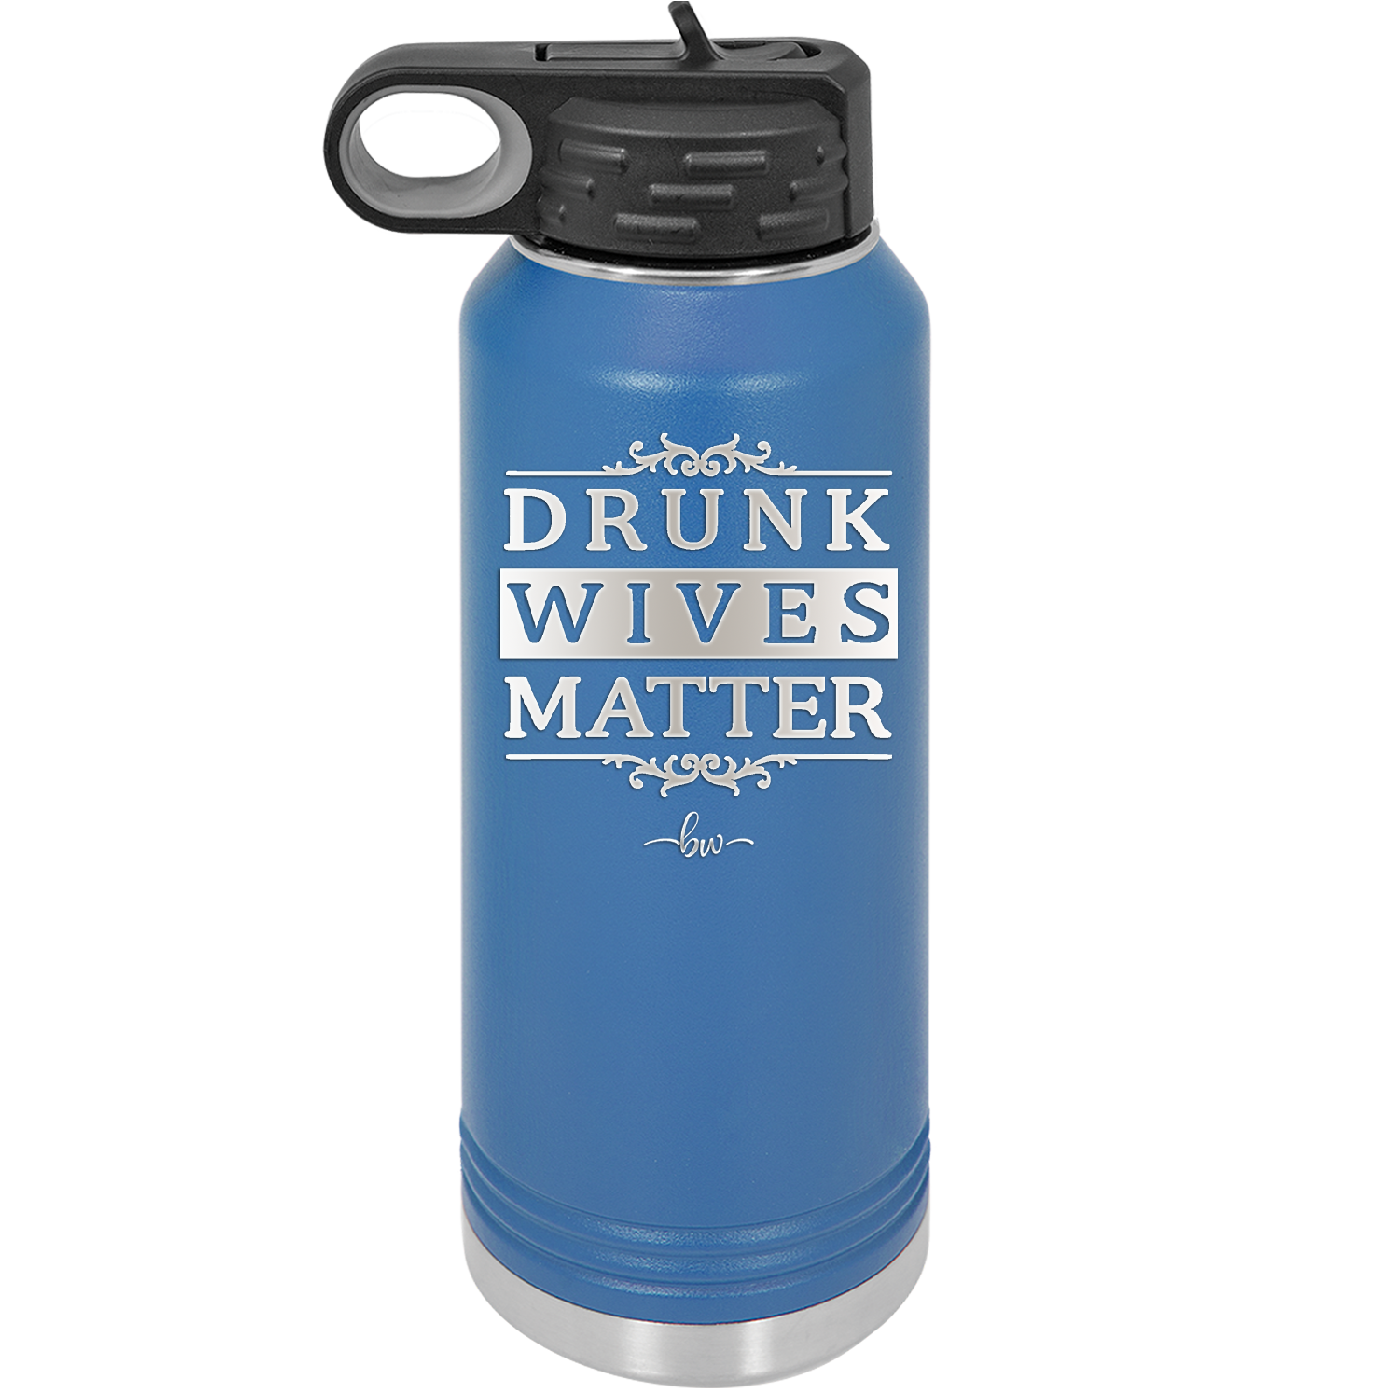 Drunk Wives Matter - Laser Engraved Stainless Steel Drinkware - 1047 -